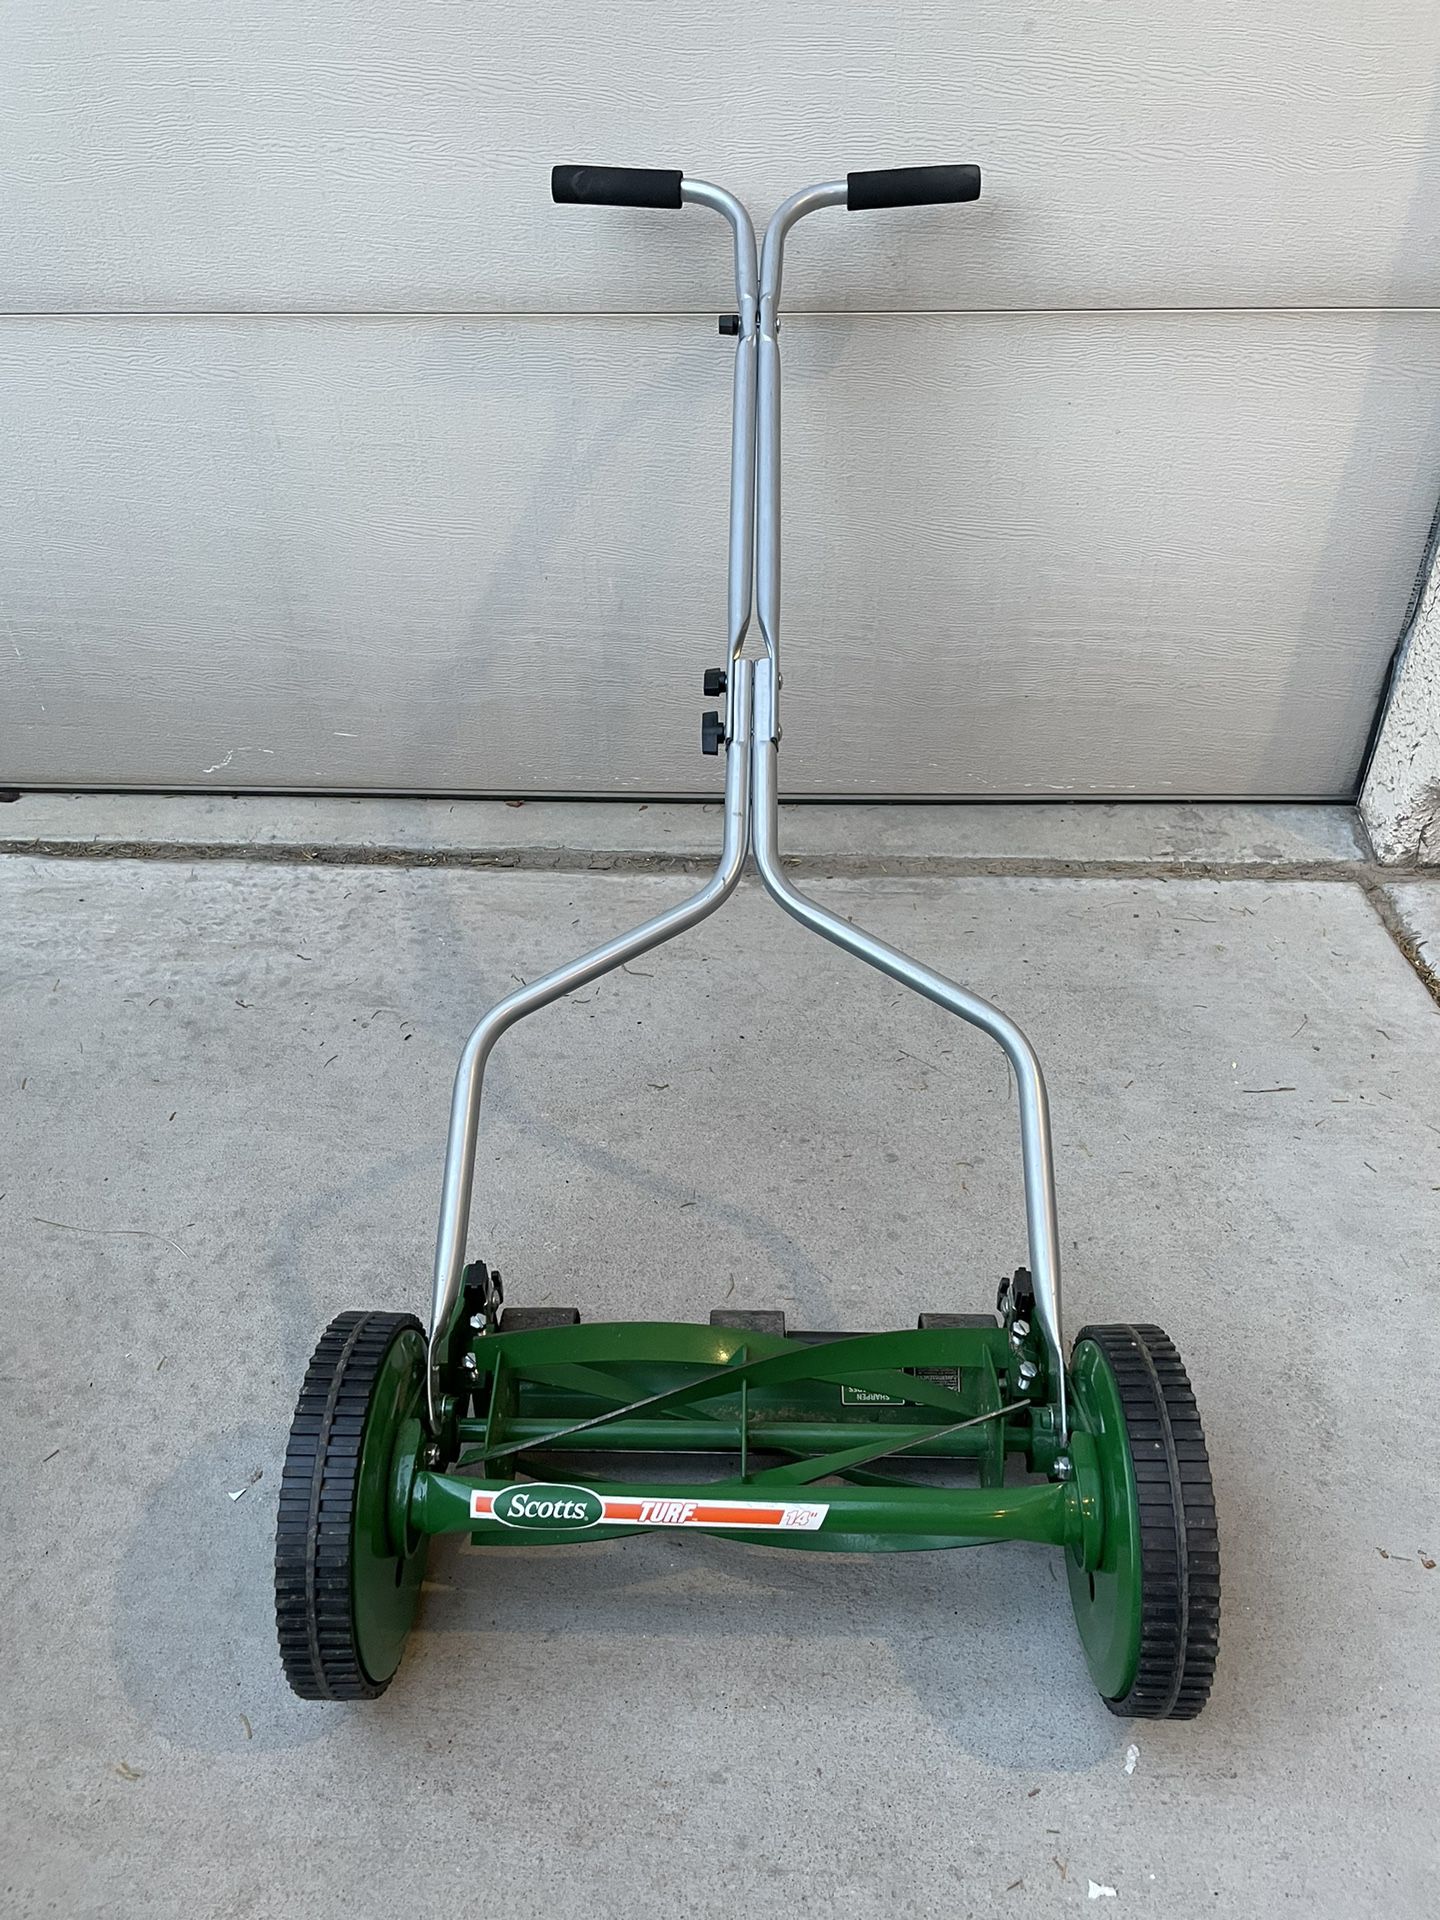 Scotts Manual Lawn Mower